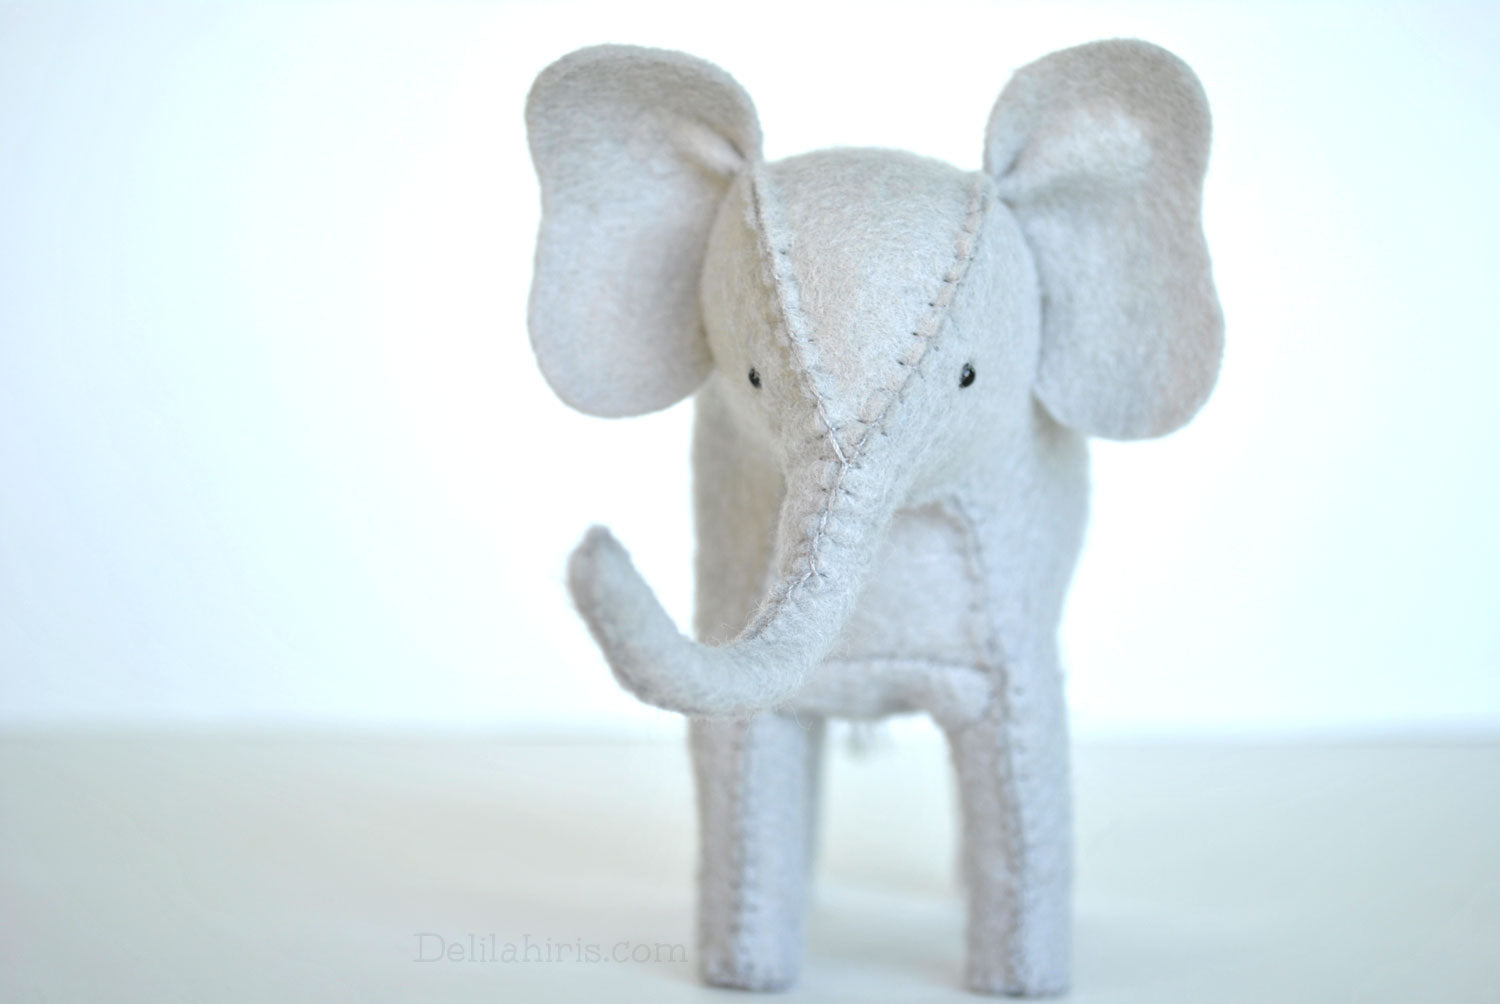 Delilah Iris Felt Elephant Hand Sewing Kit